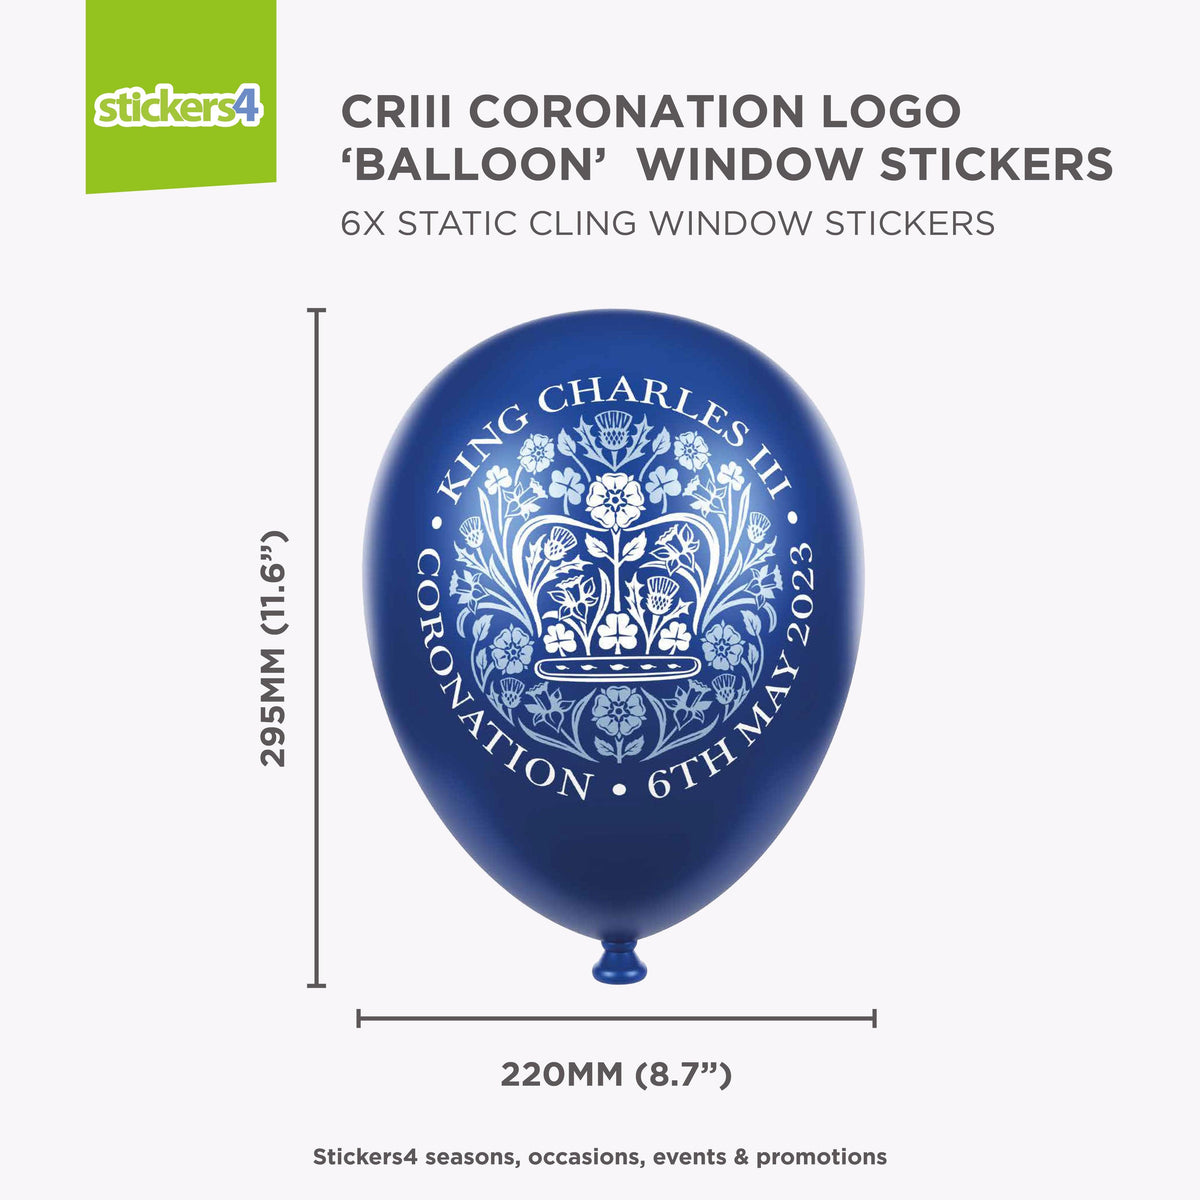 CRIII Coronation - Official Logo &#39;Balloon&#39; Effect Window Clings - LARGE Balloons Retail Window Display